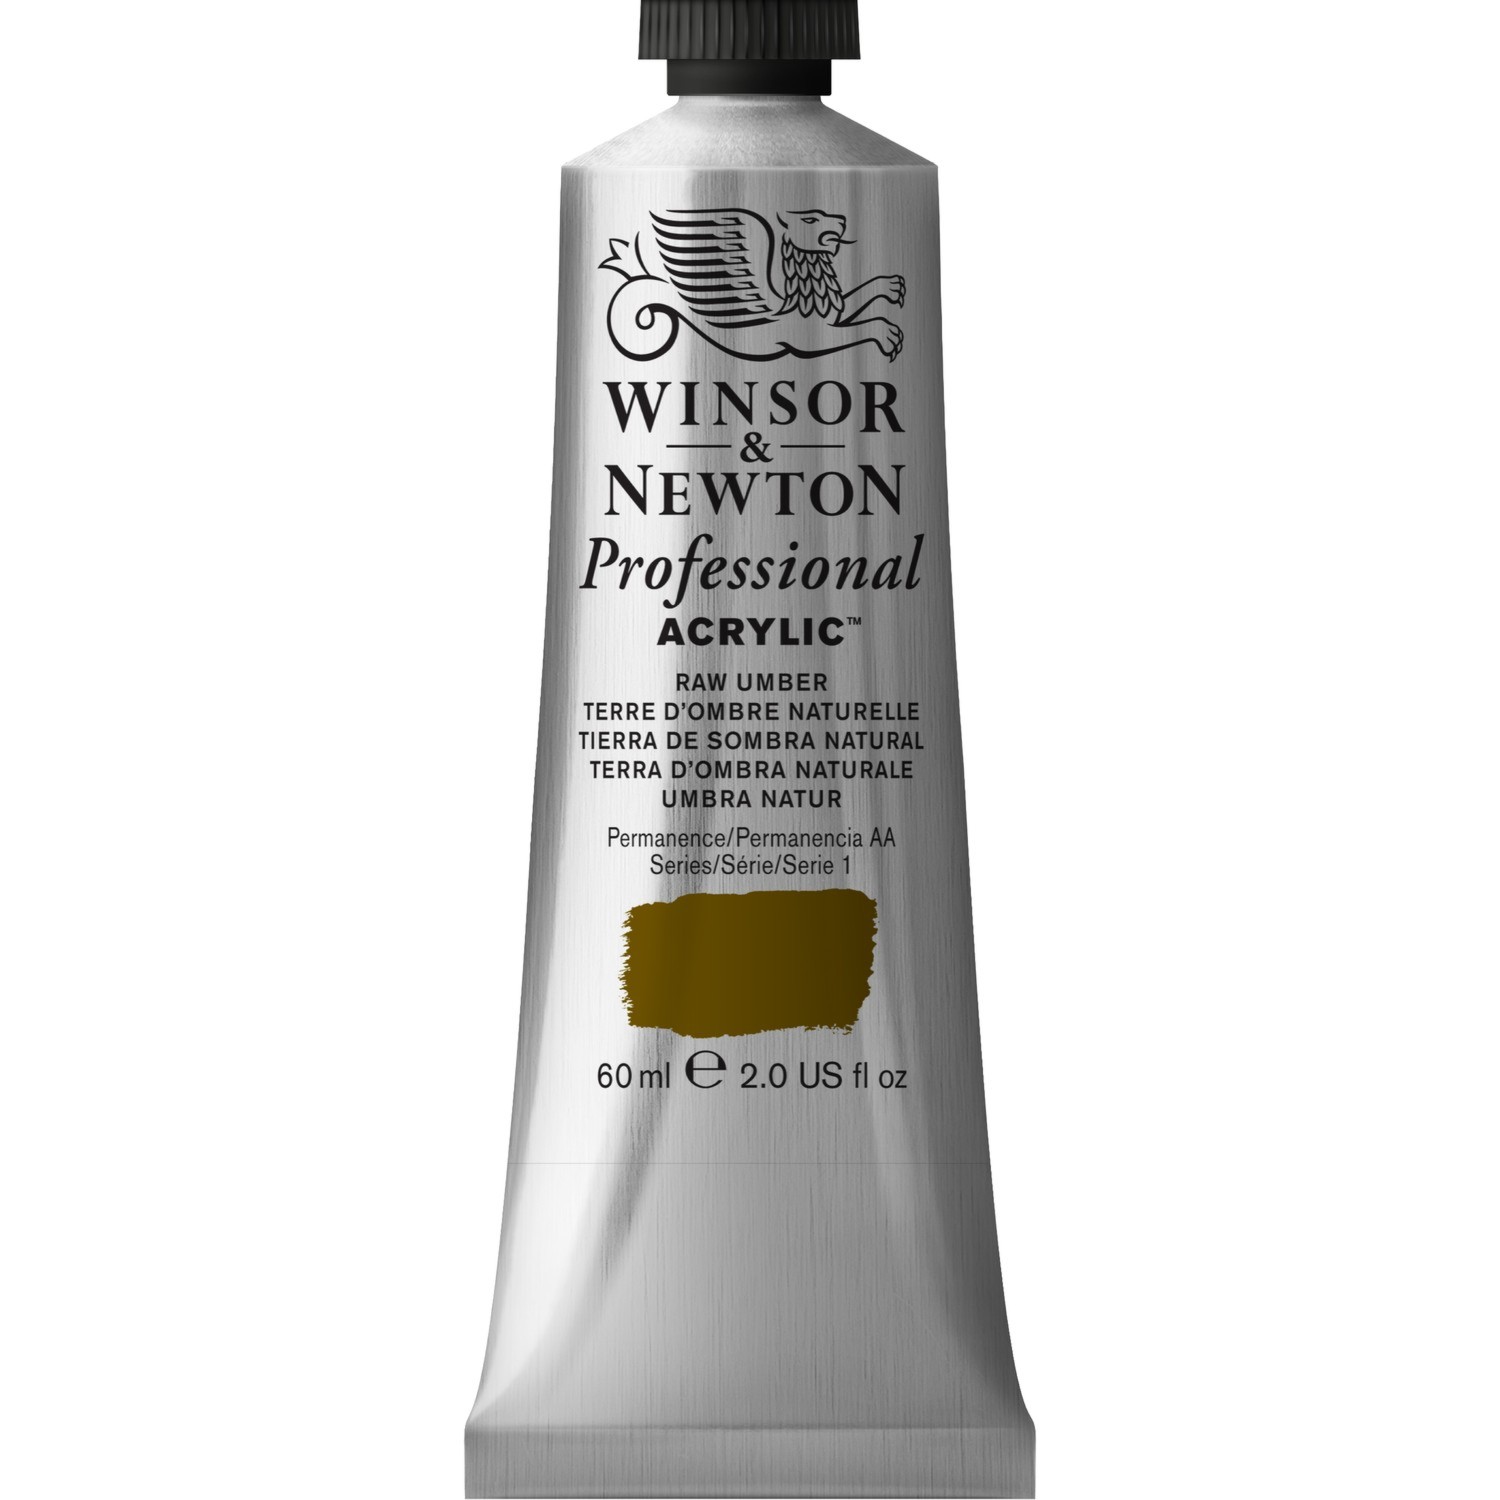 Winsor and Newton 60ml Professional Acrylic Paint - Raw Umber Image 1